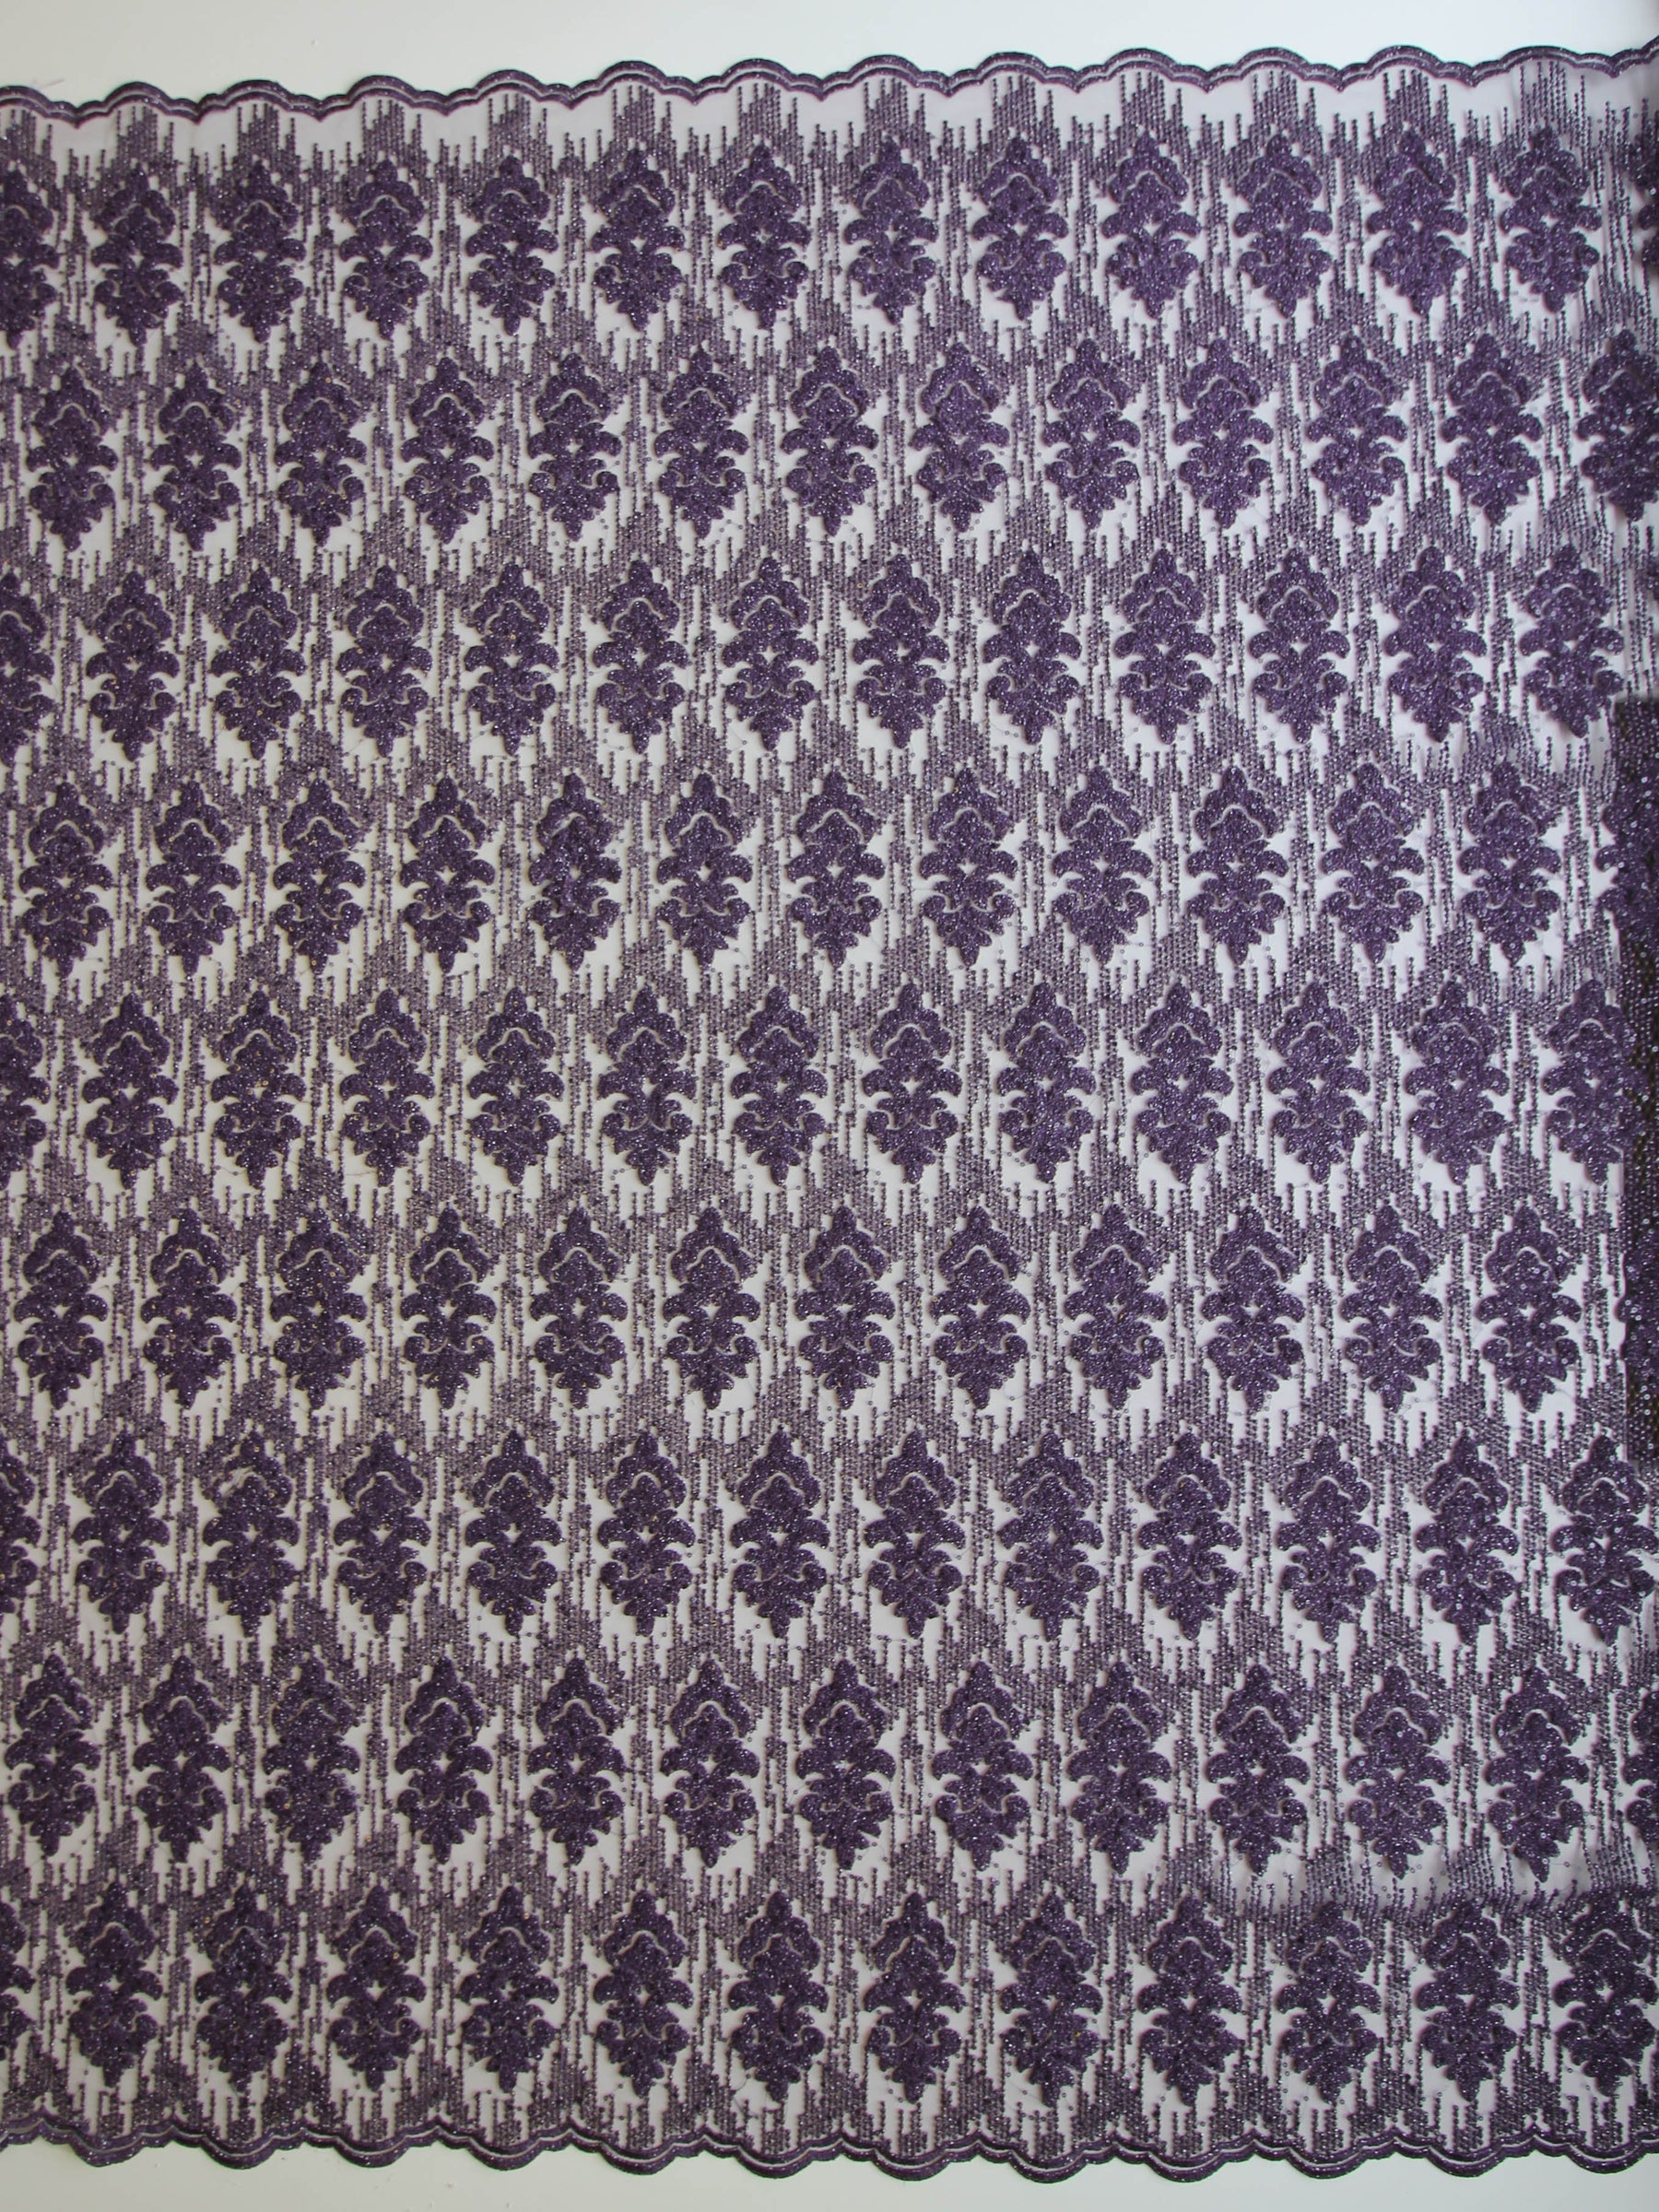 Purple Embroidered Lace – Mara